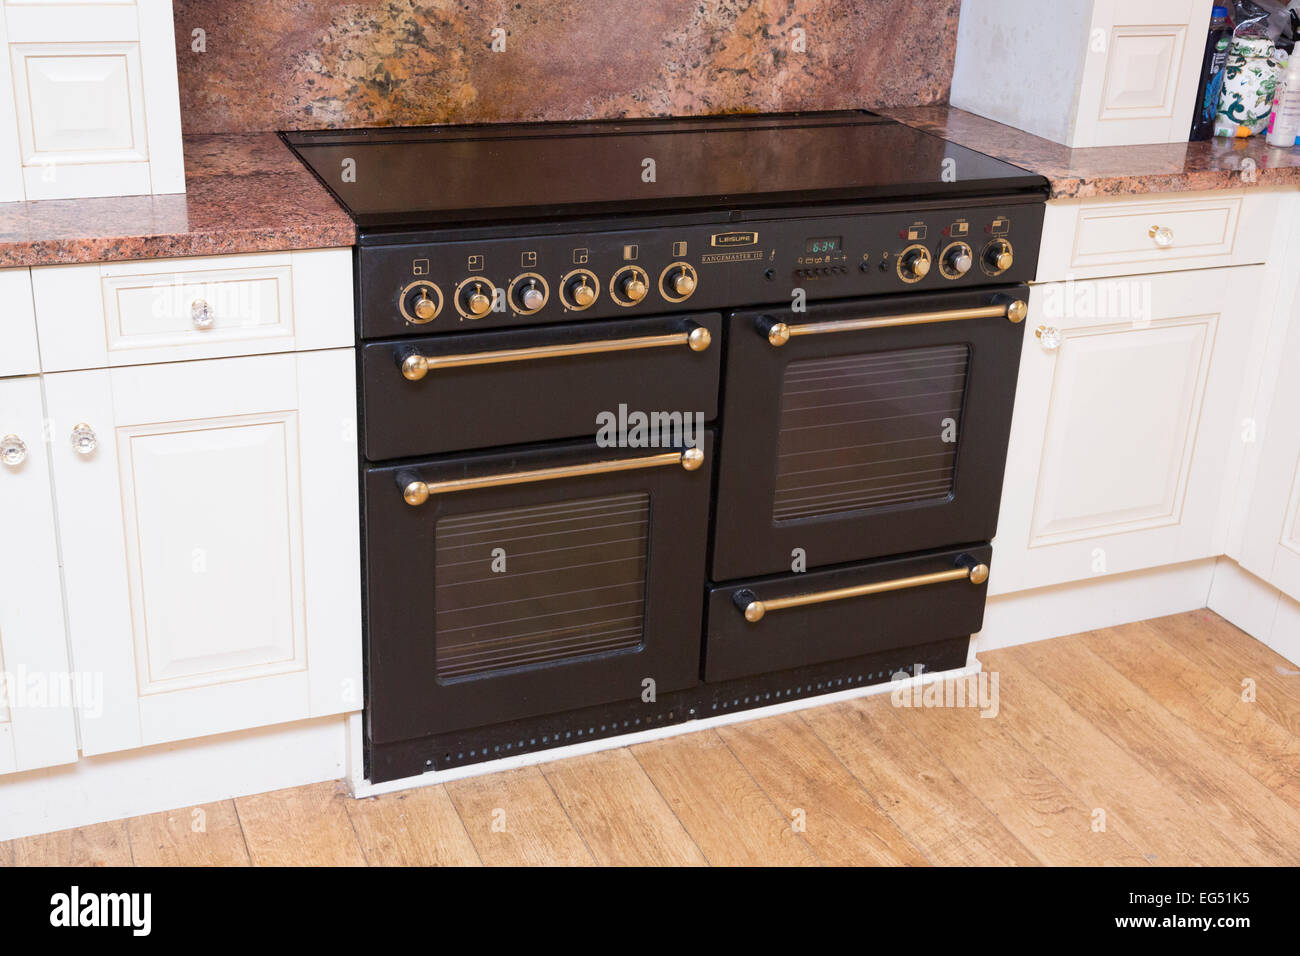 Rangemaster 110 cooker in a kitchen Stock Photo